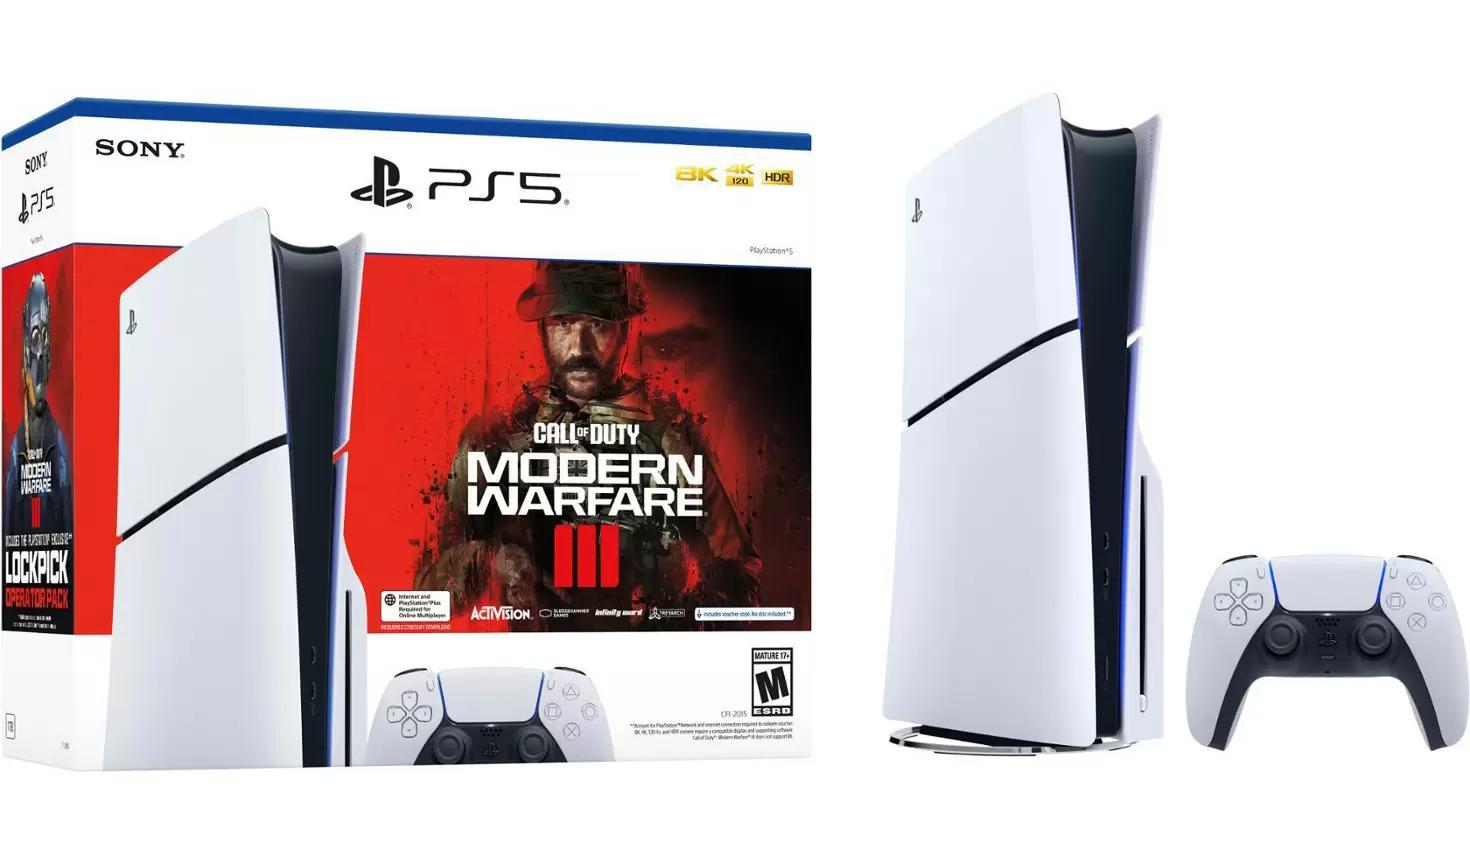 Sony PlayStation 5 Slim Console with Call of Duty Modern Warfare III $499.99 Shipped